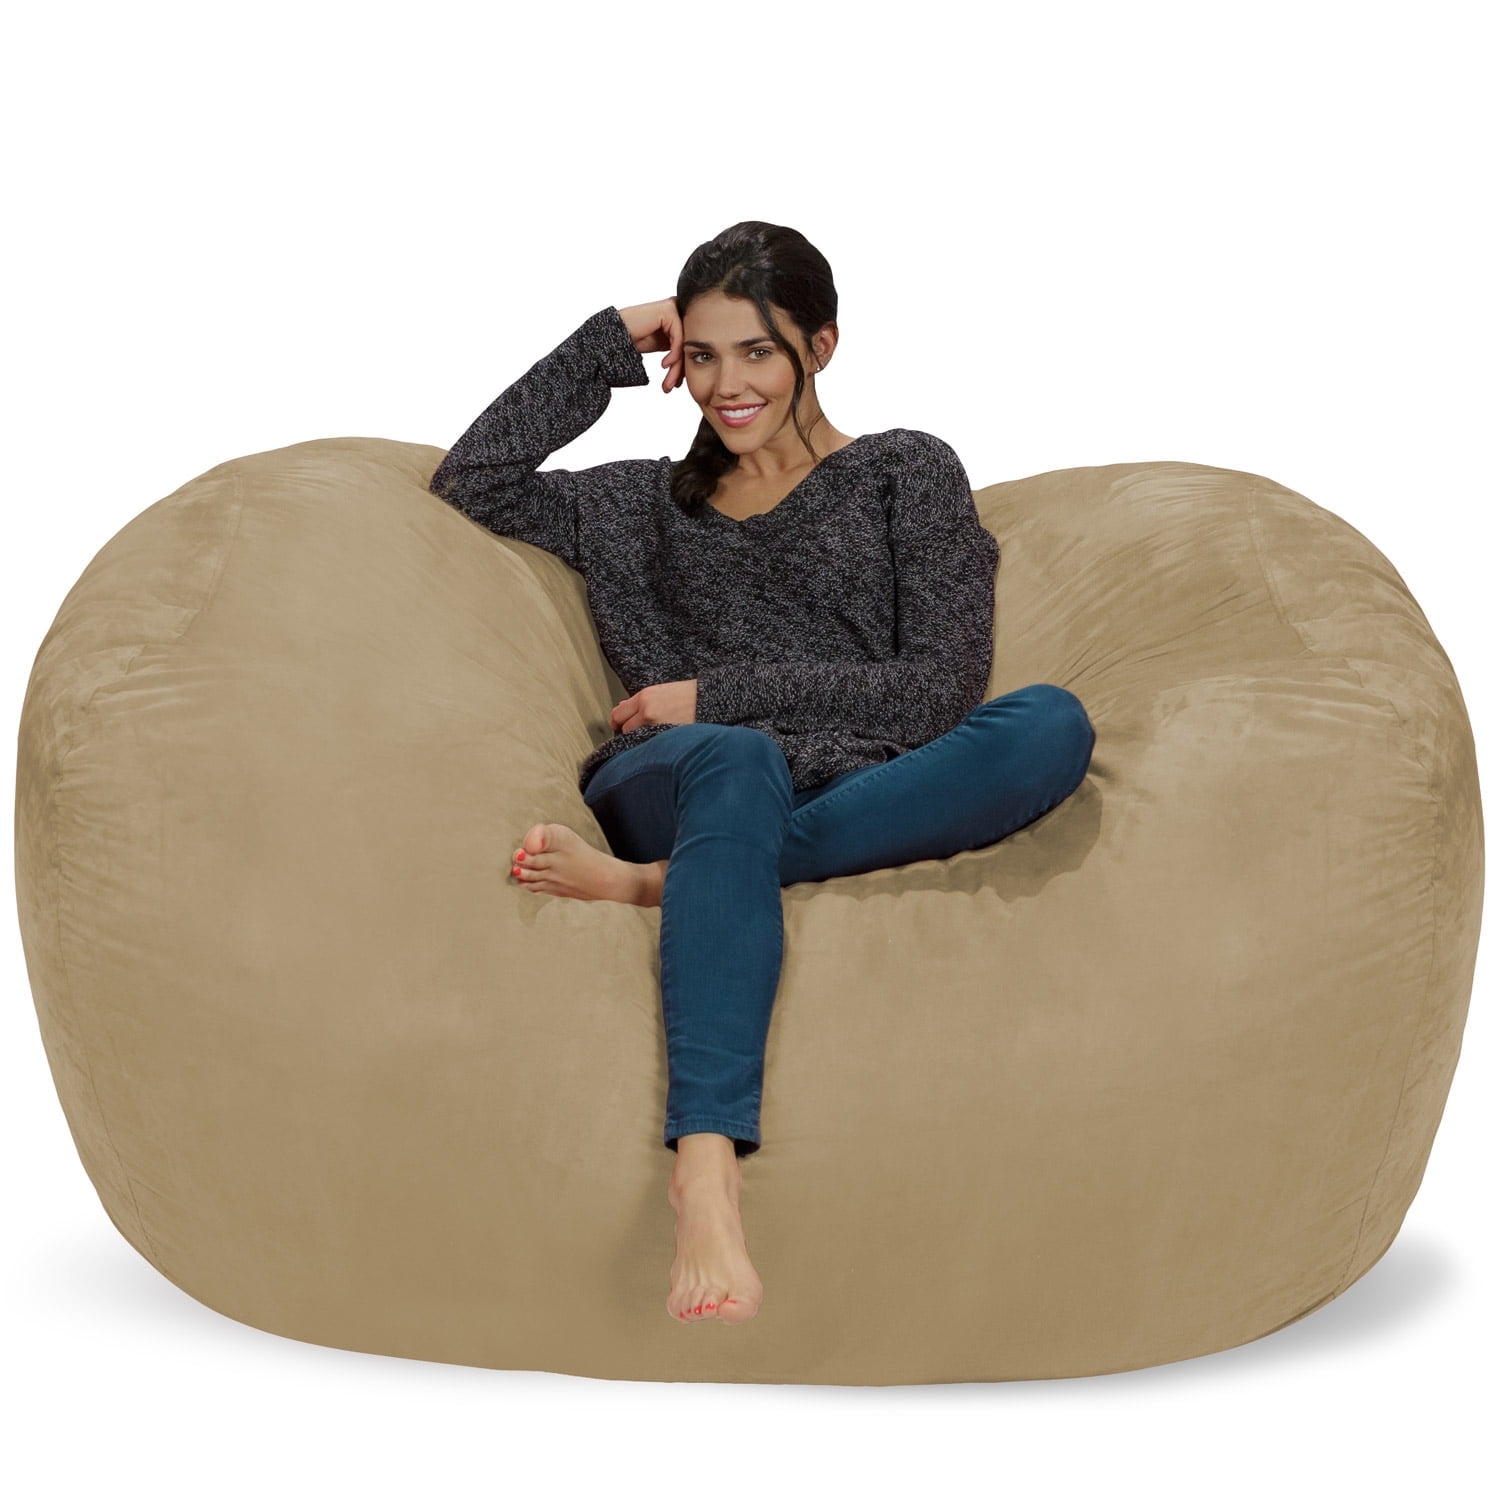 Chill Sack Bean Bag Chair: Giant 8' Memory Foam Furniture Bean Bag - Big Sofa with Soft Micro Fiber Cover - Camel